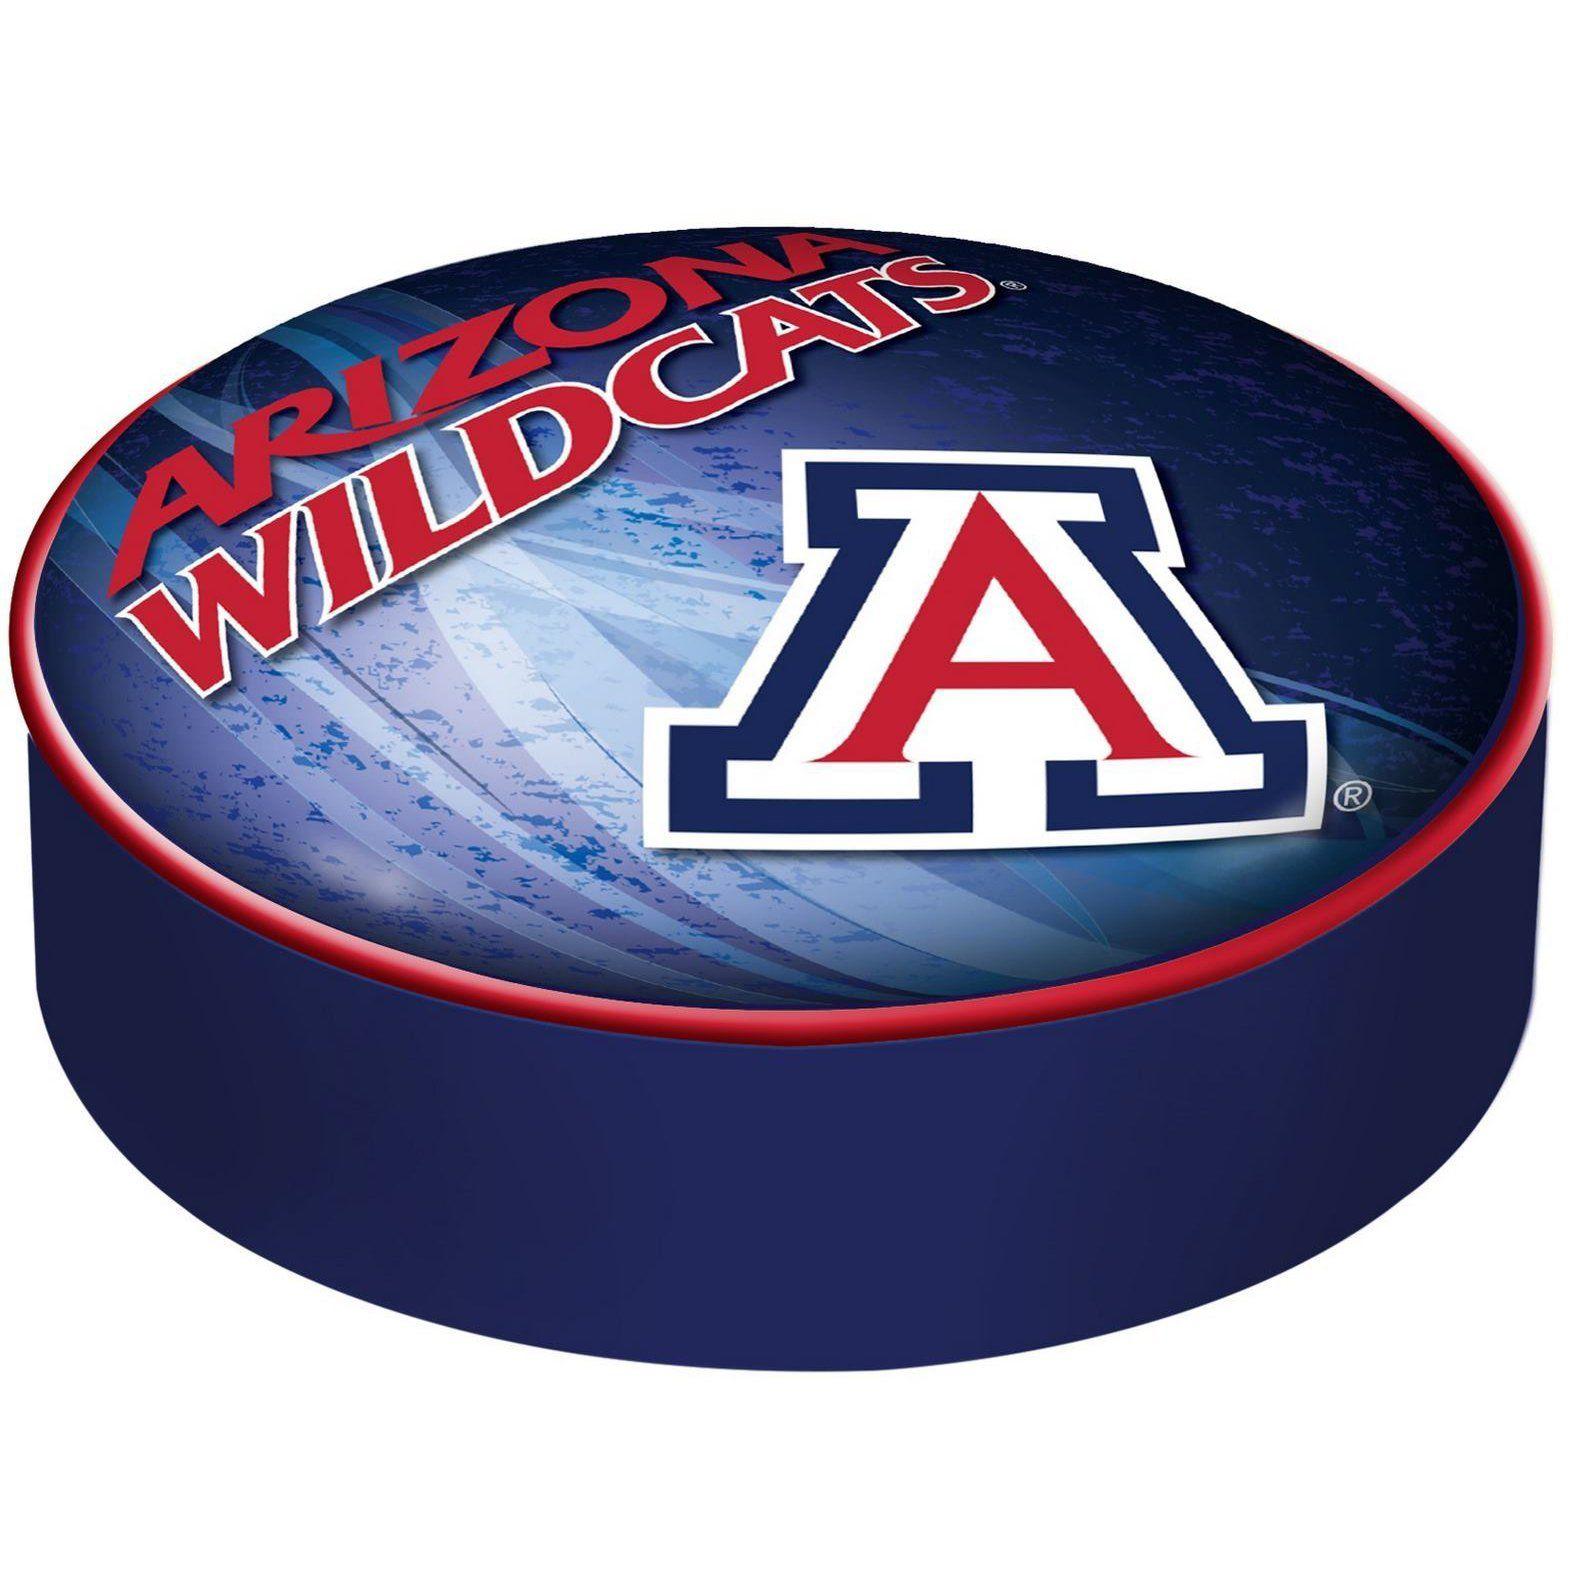 Arizona Wildcats Logo - Arizona Seat Cover - Arizona Wildcats Logo - Billiards and Game Room S